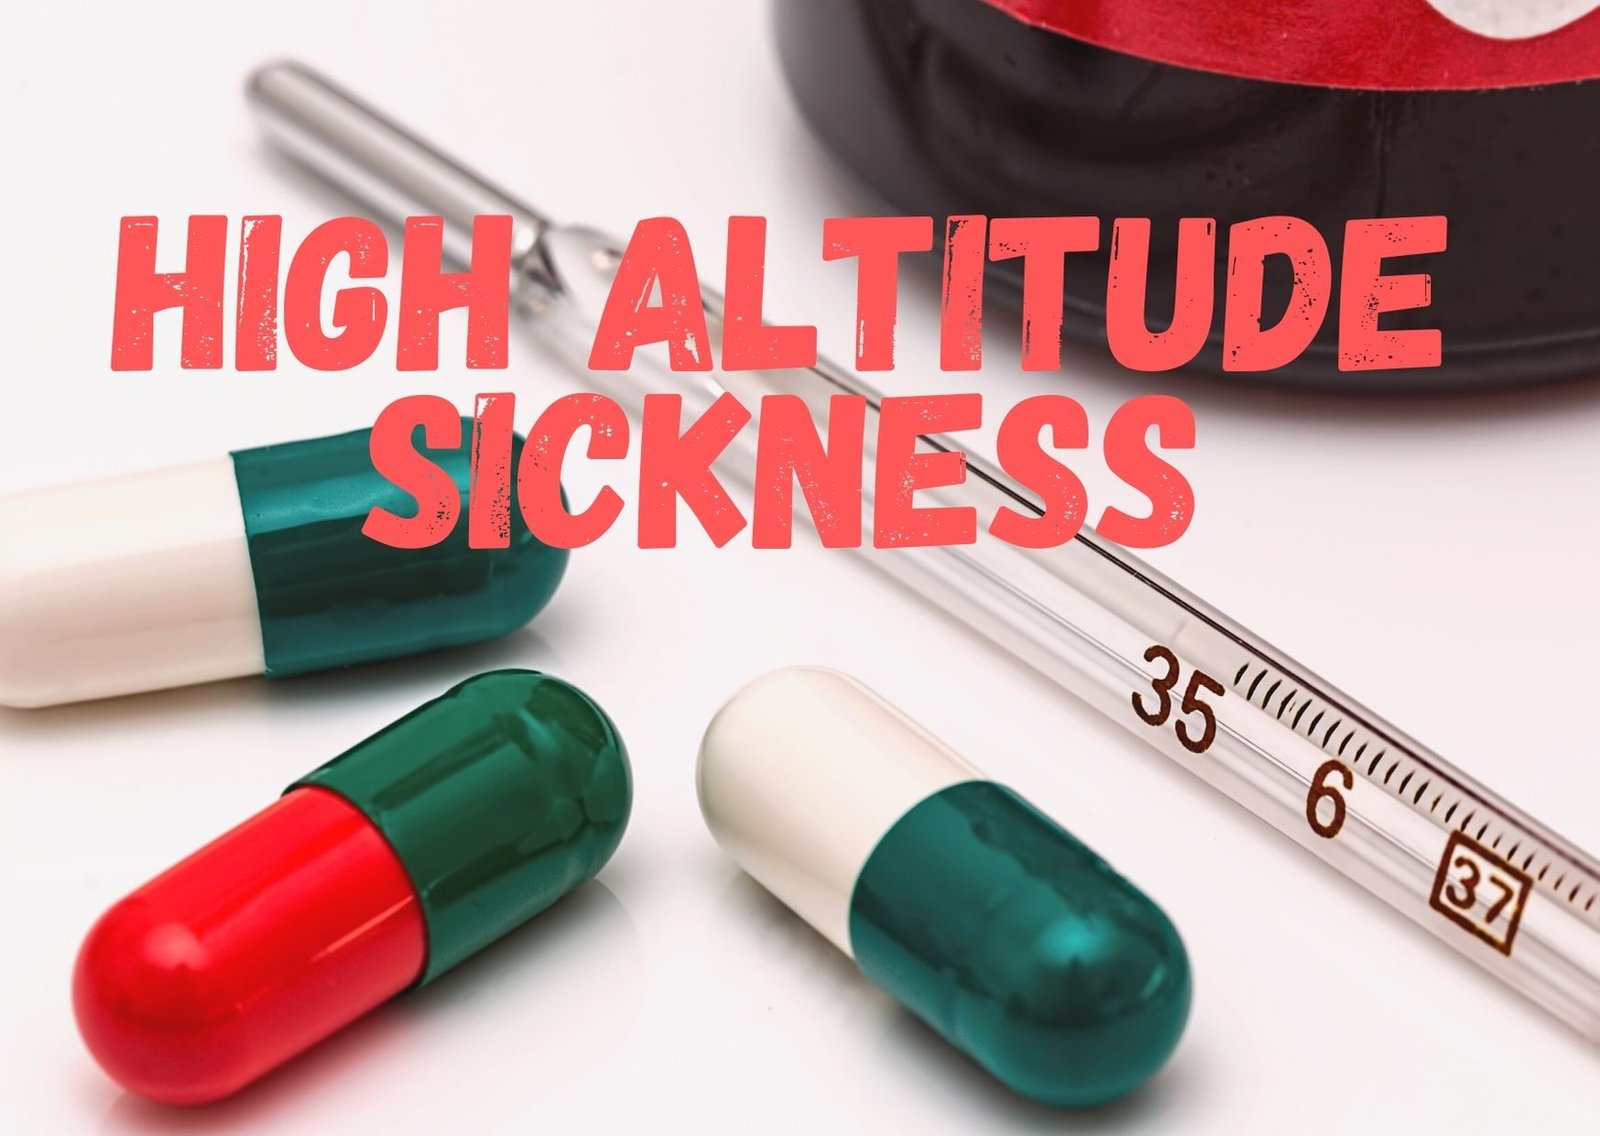 High altitude sickness